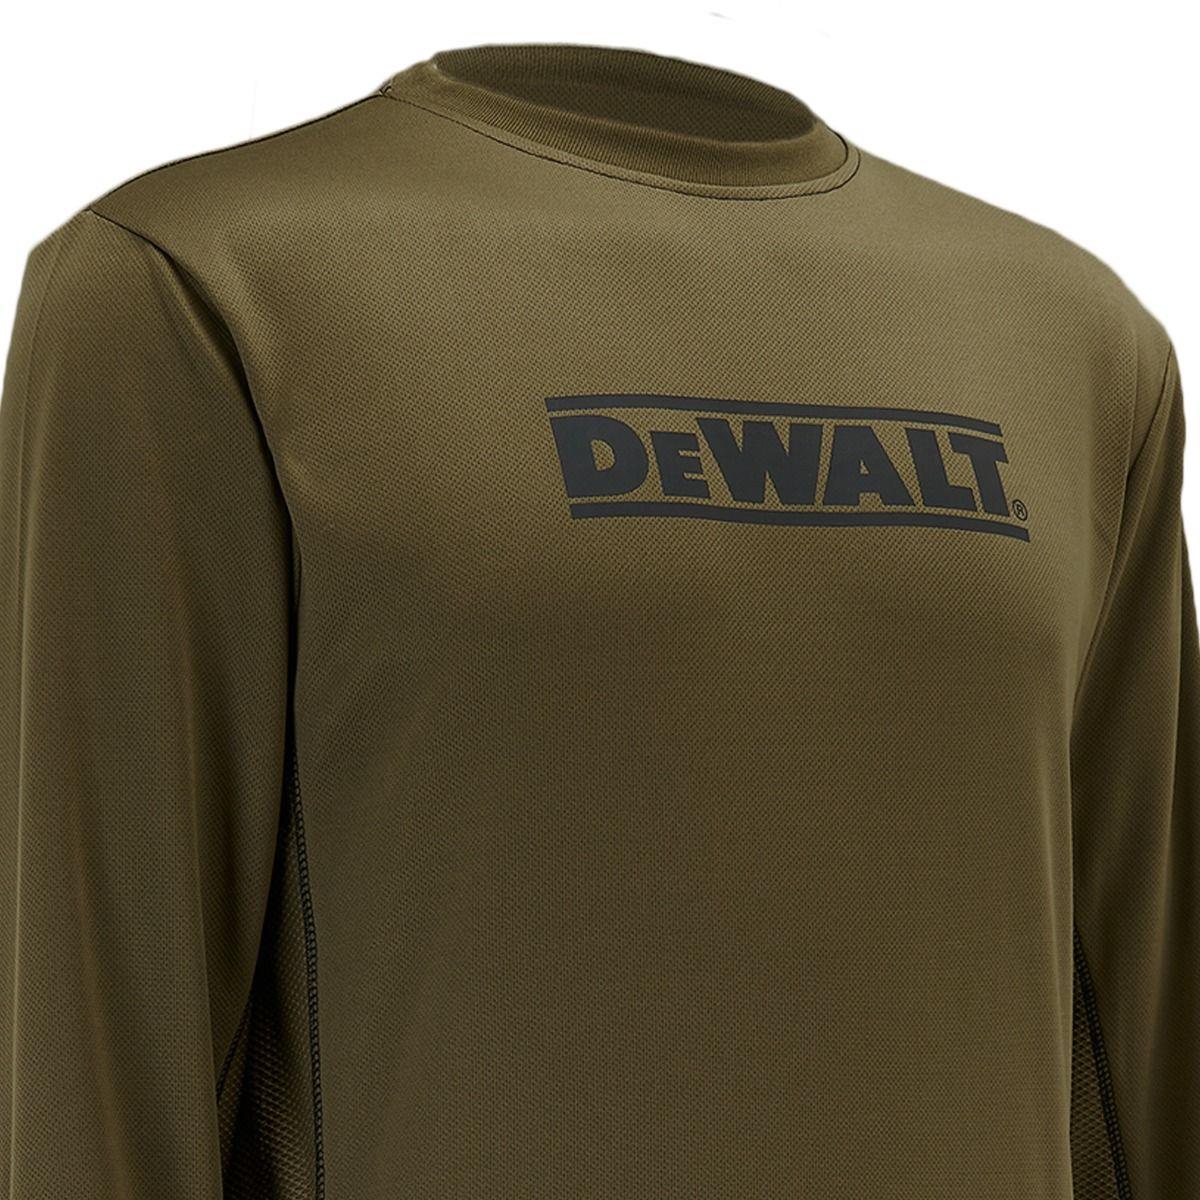 DeWalt Truro olive green lightweight long sleeve performance work t-shirt